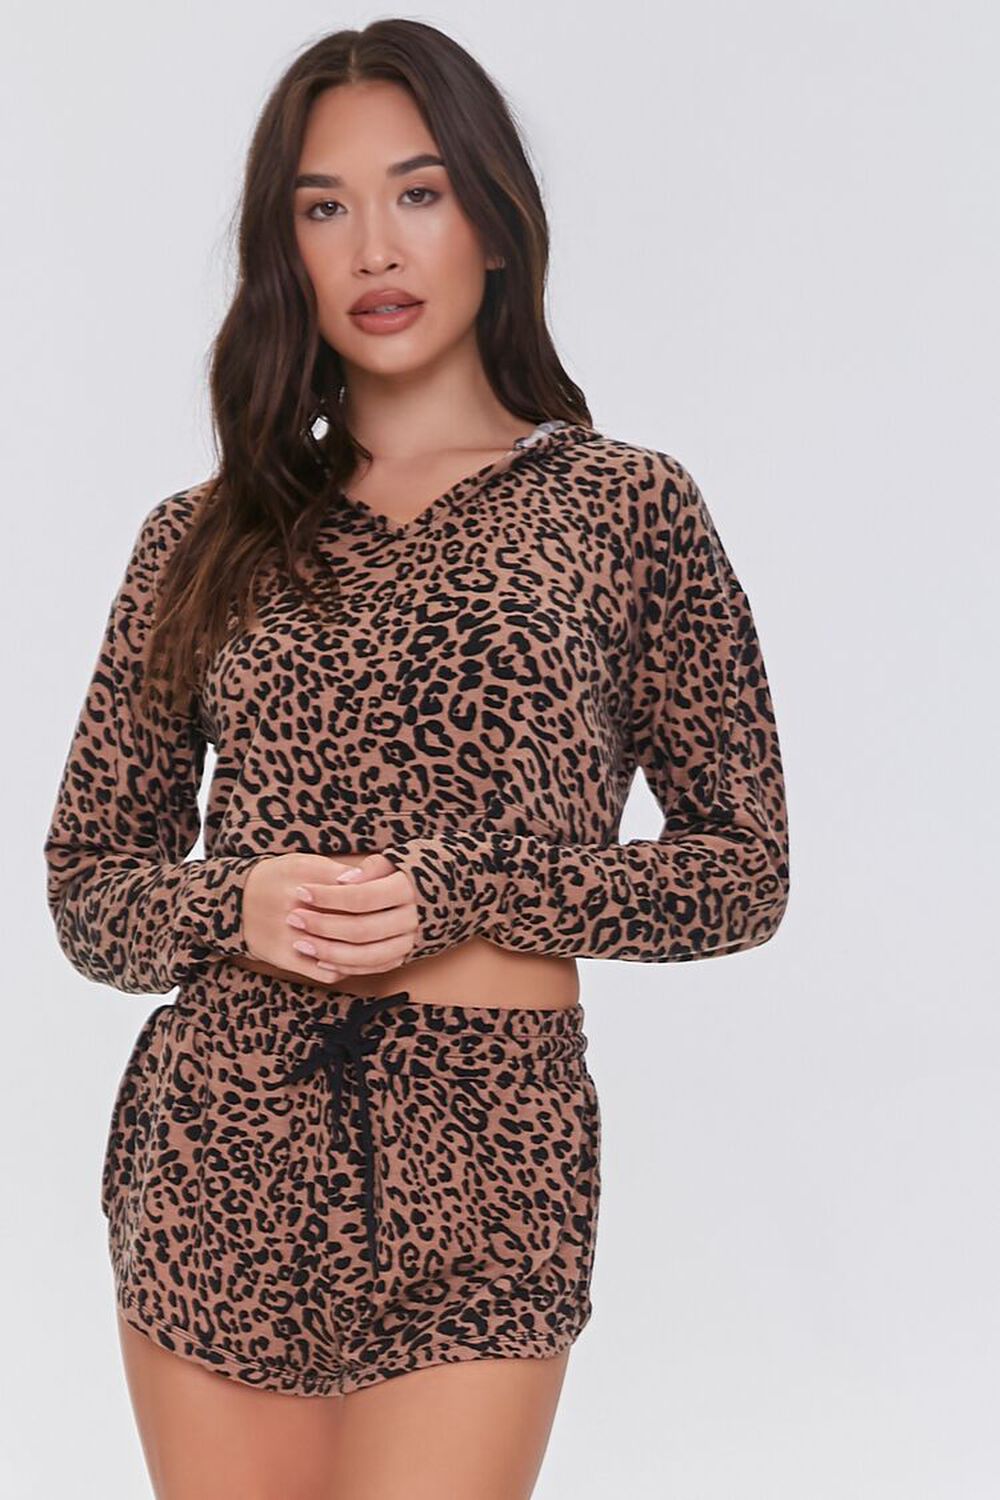 Leopard Print Pajama Shorts, image 1